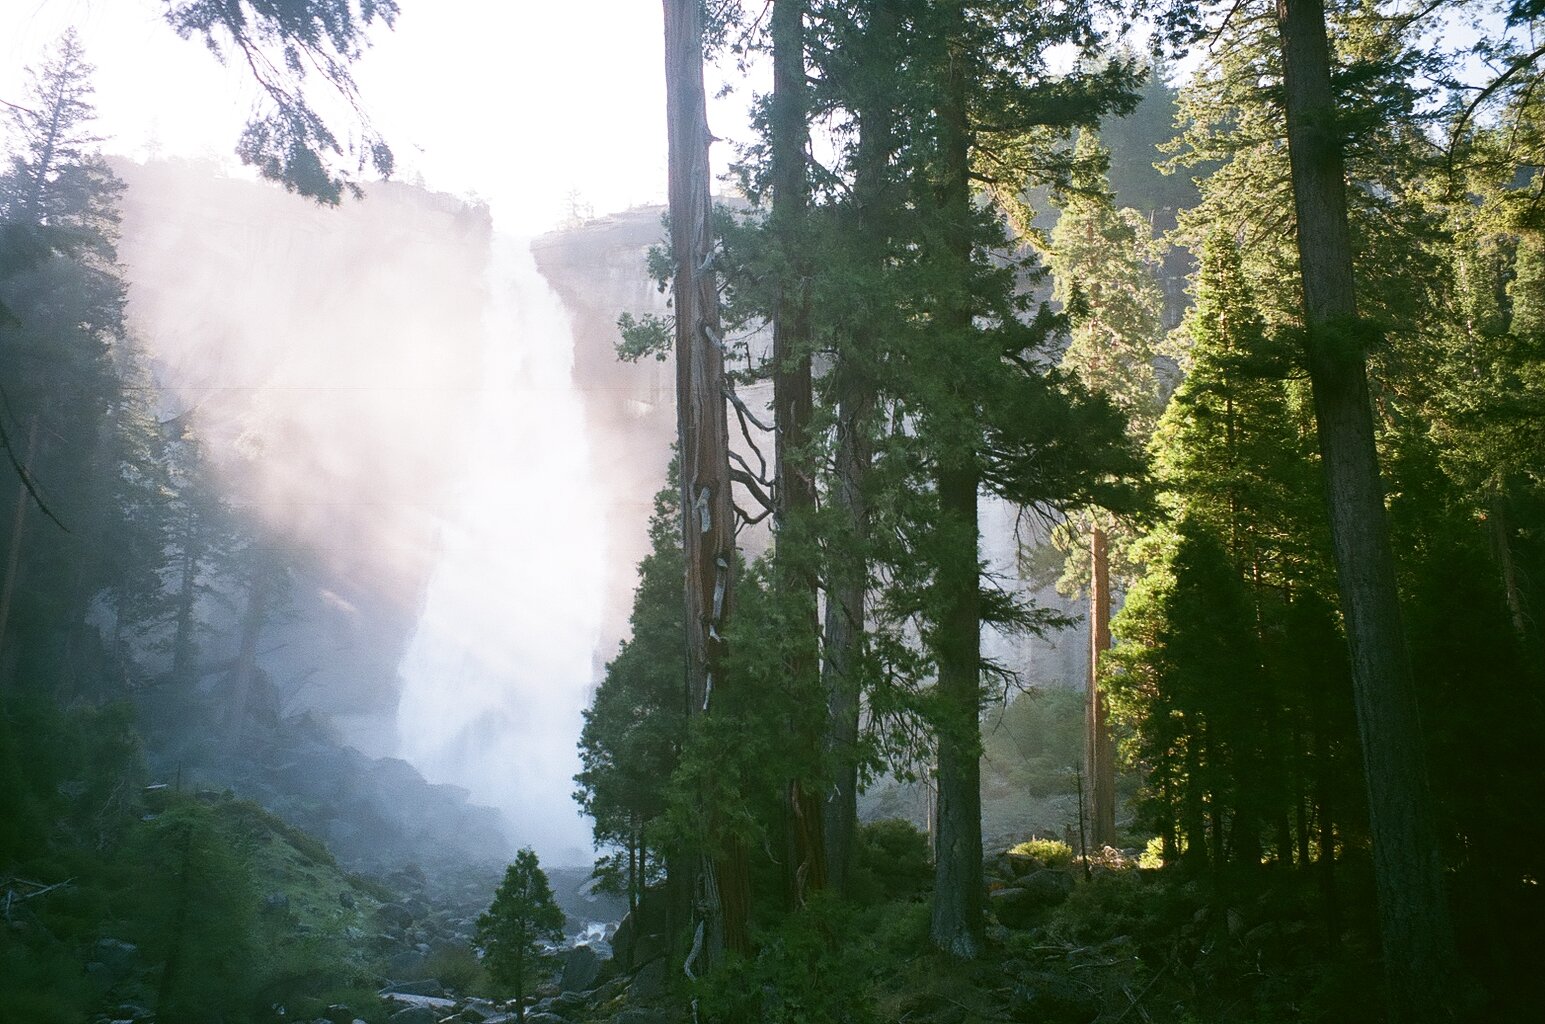  Yosemite National Park, California. 2021 